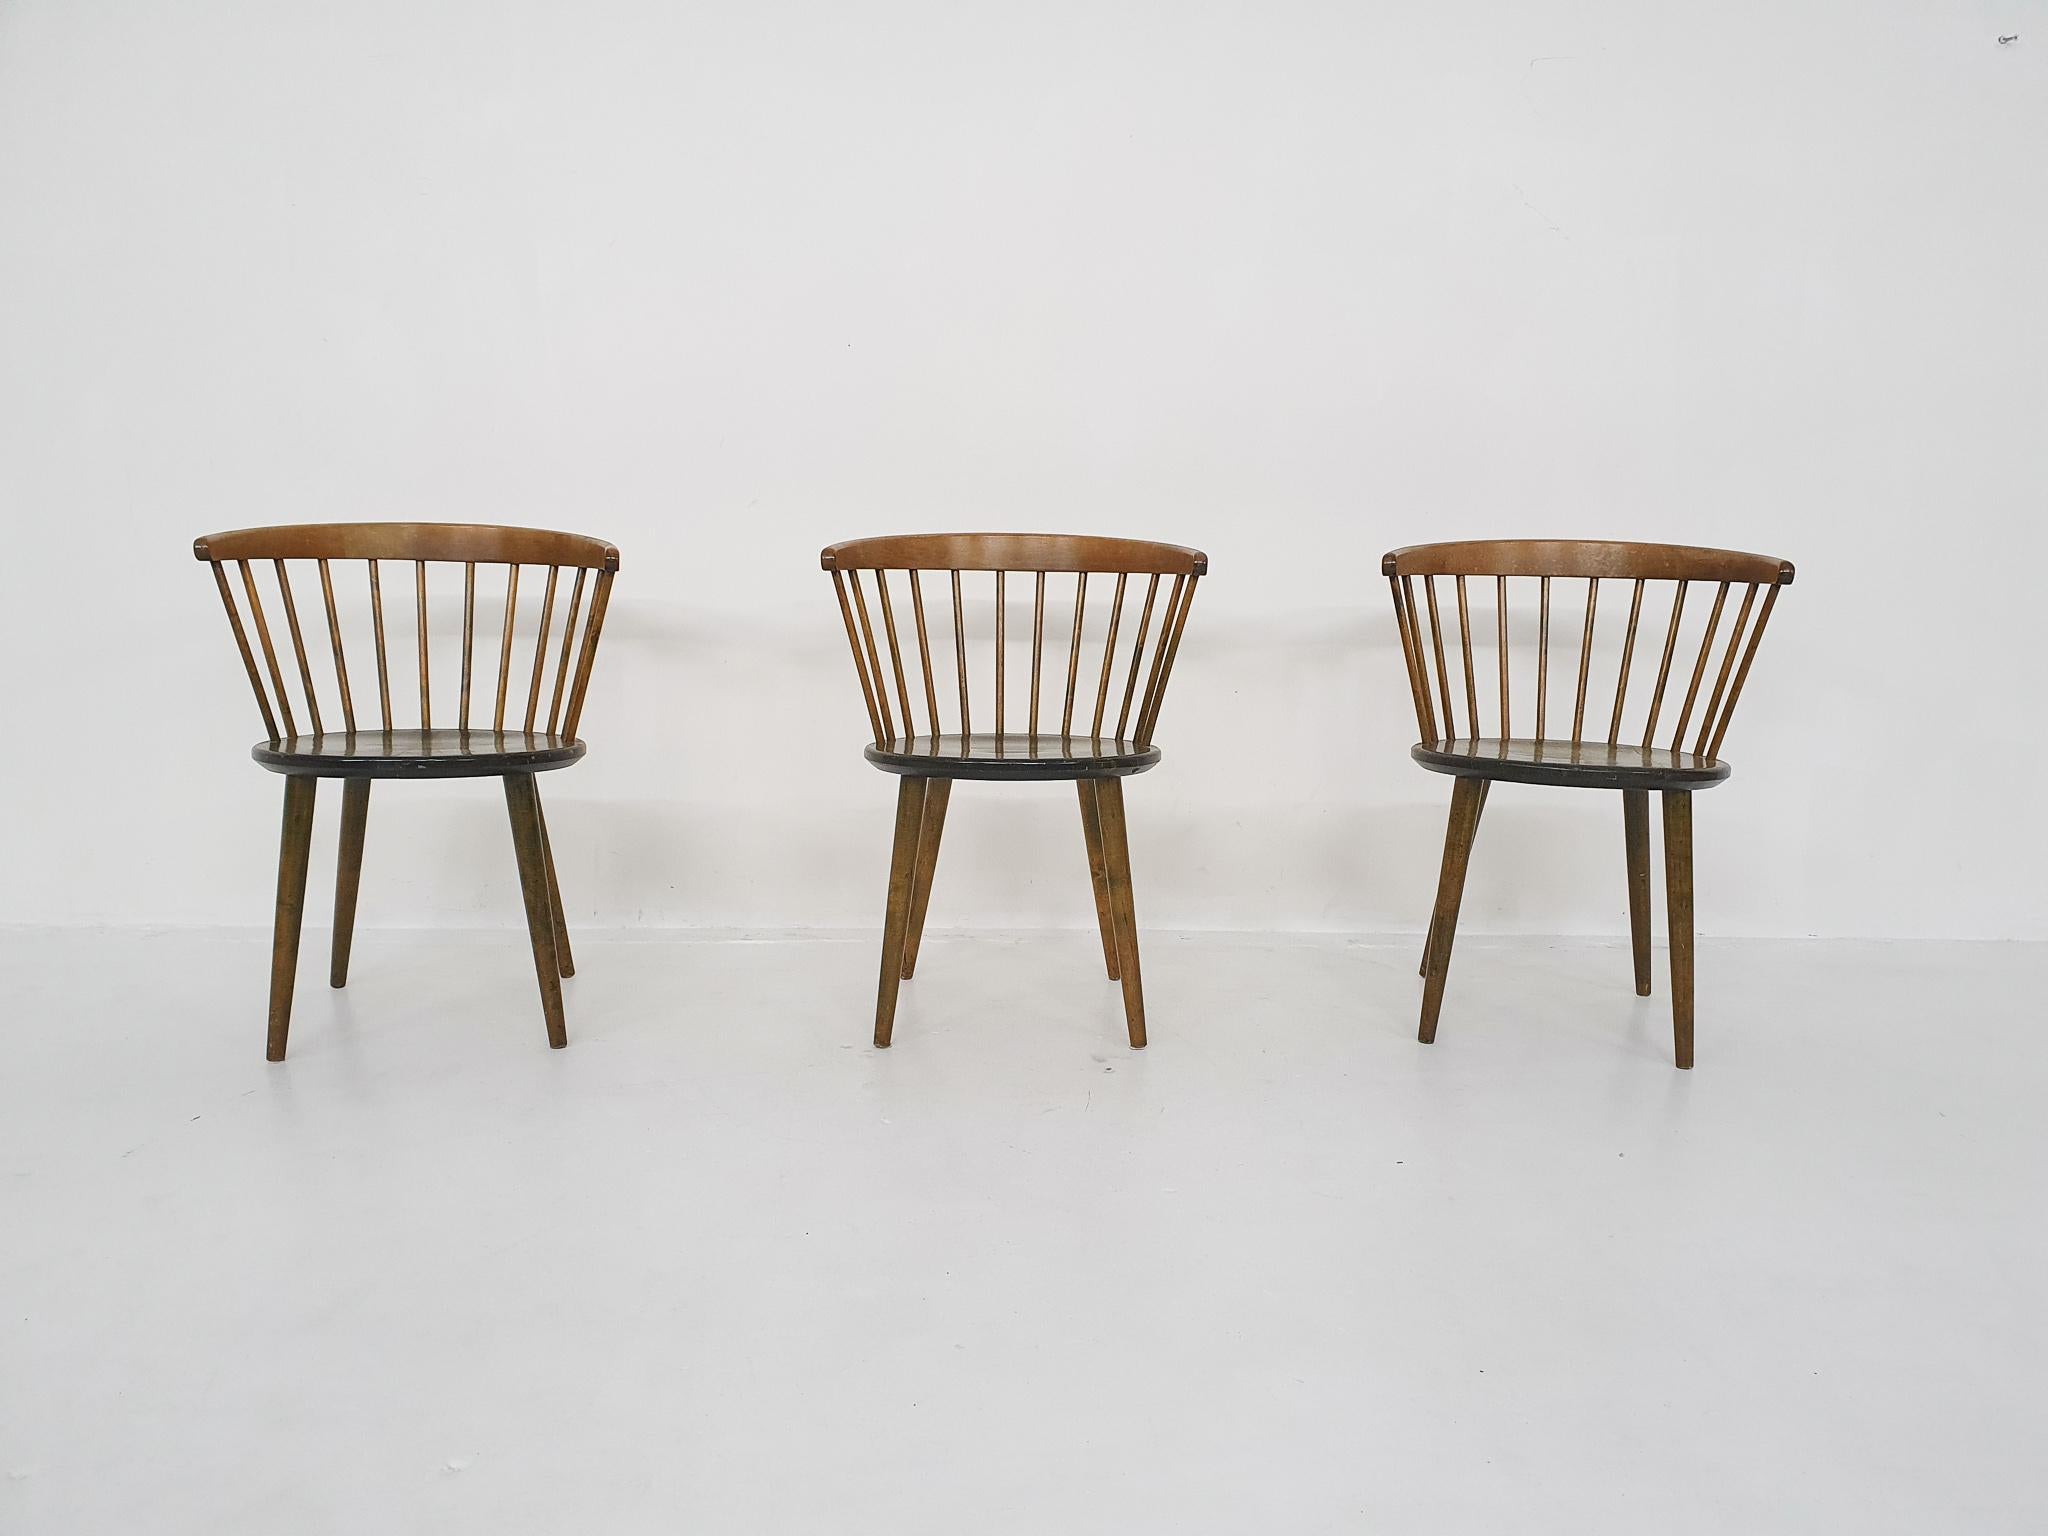 3 dark oak spindle back chairs by Yngve Ekstrom for Nesto.